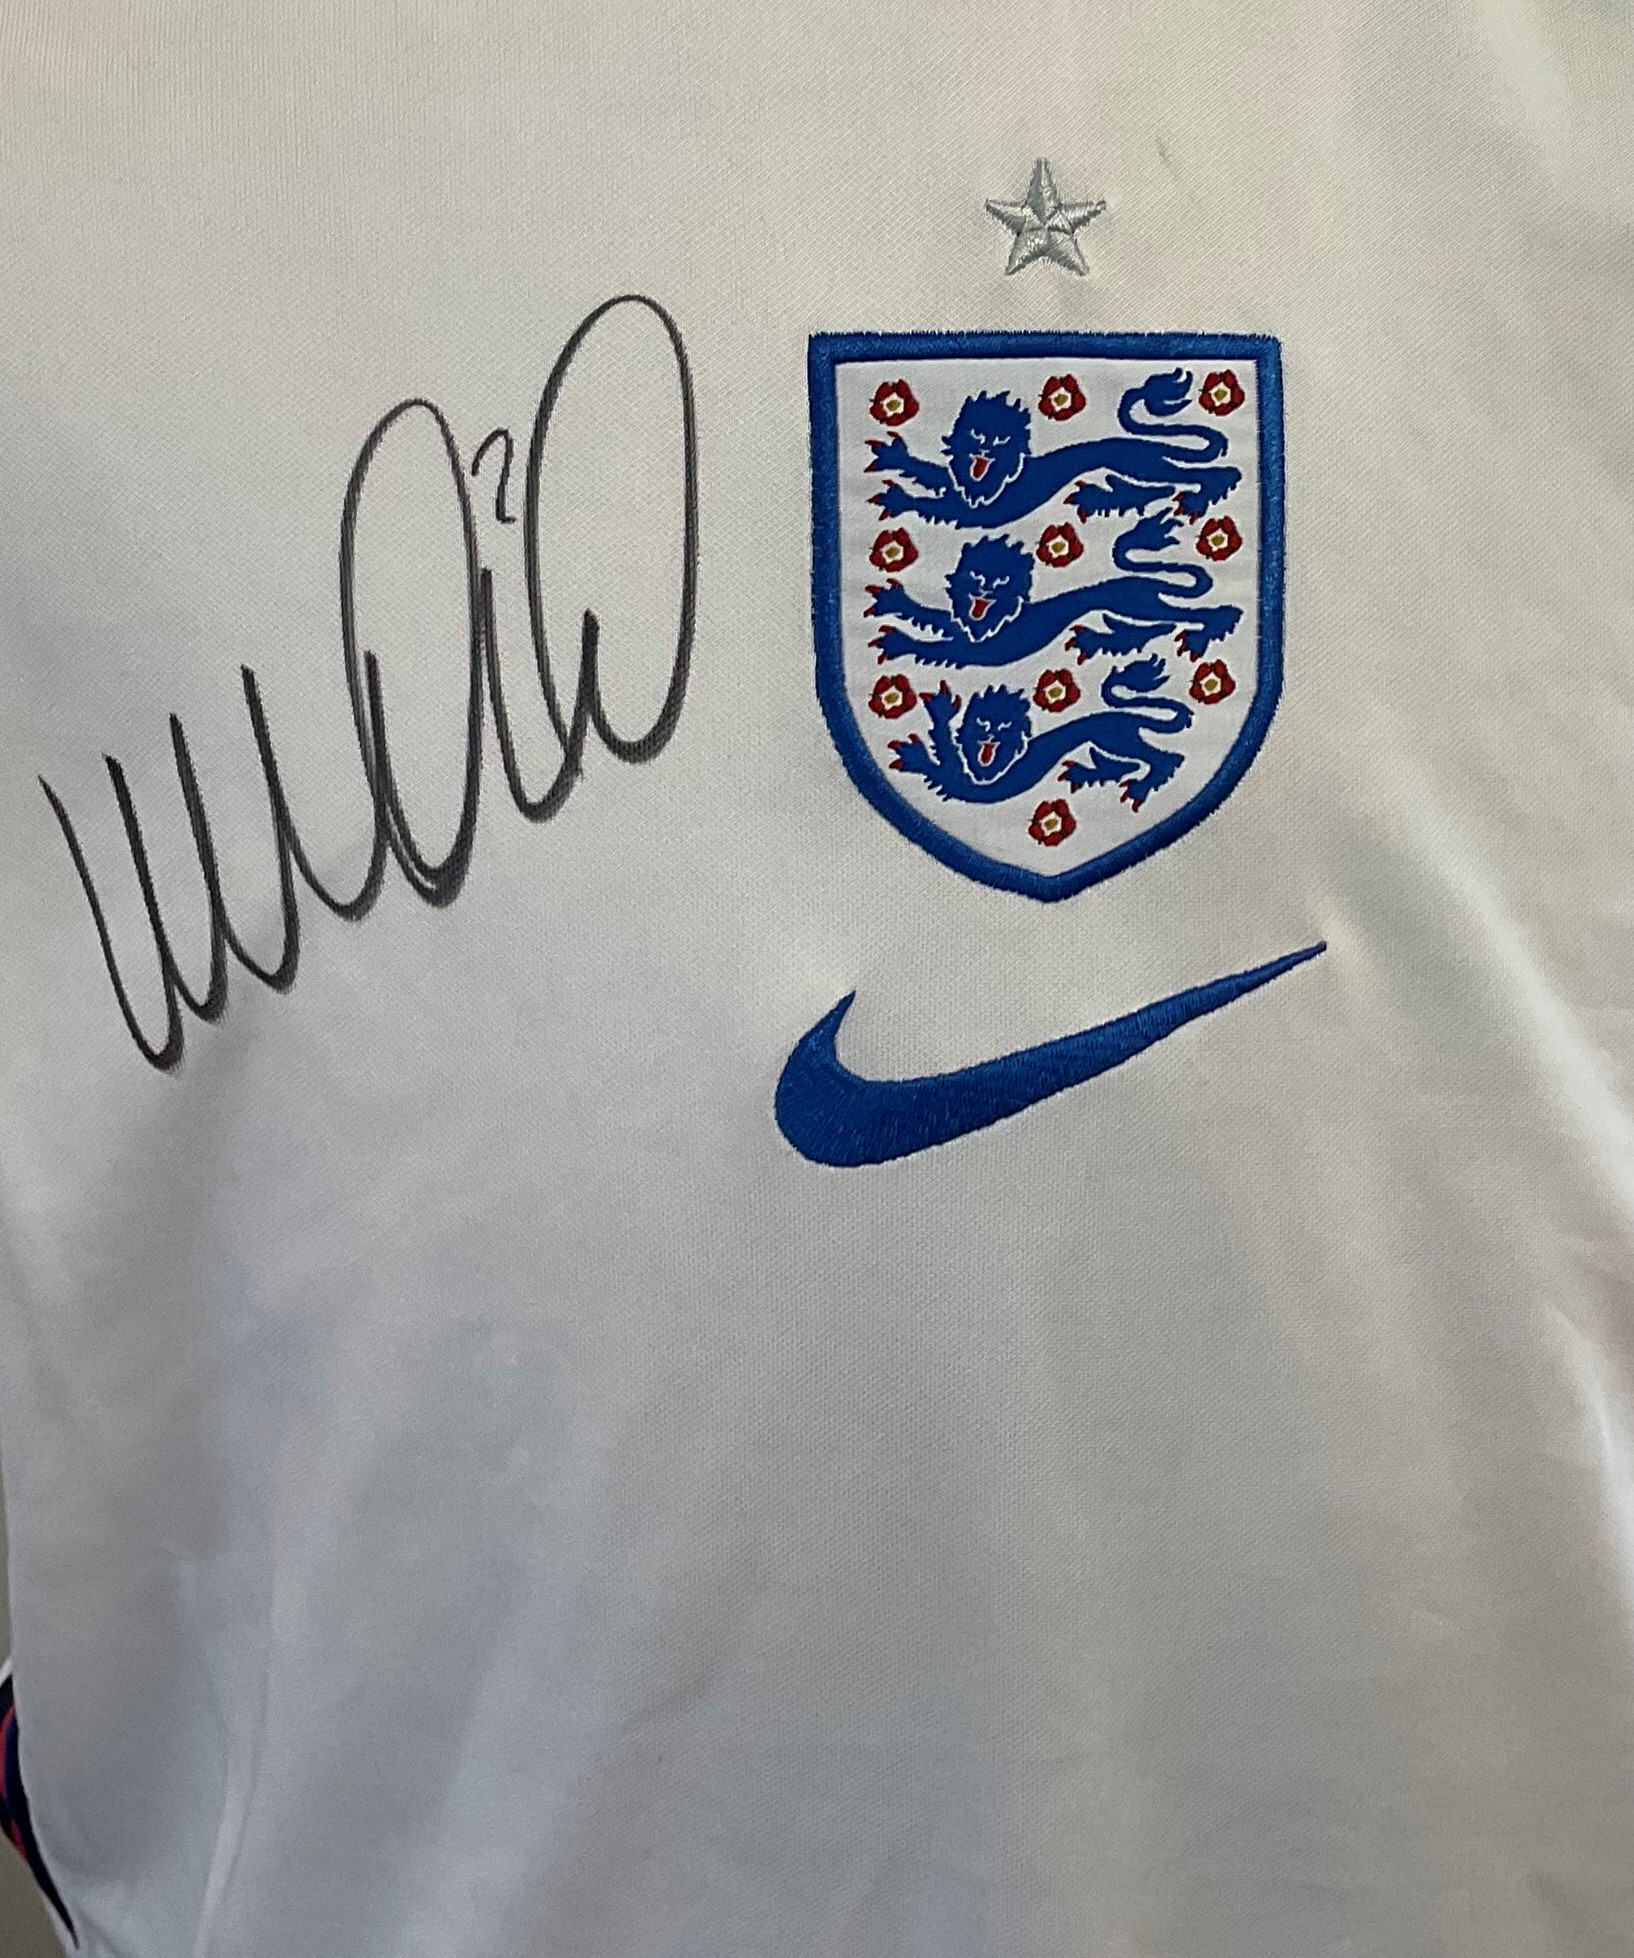 Football Kyle Walker signed England replica shirt size XL. - Image 2 of 2